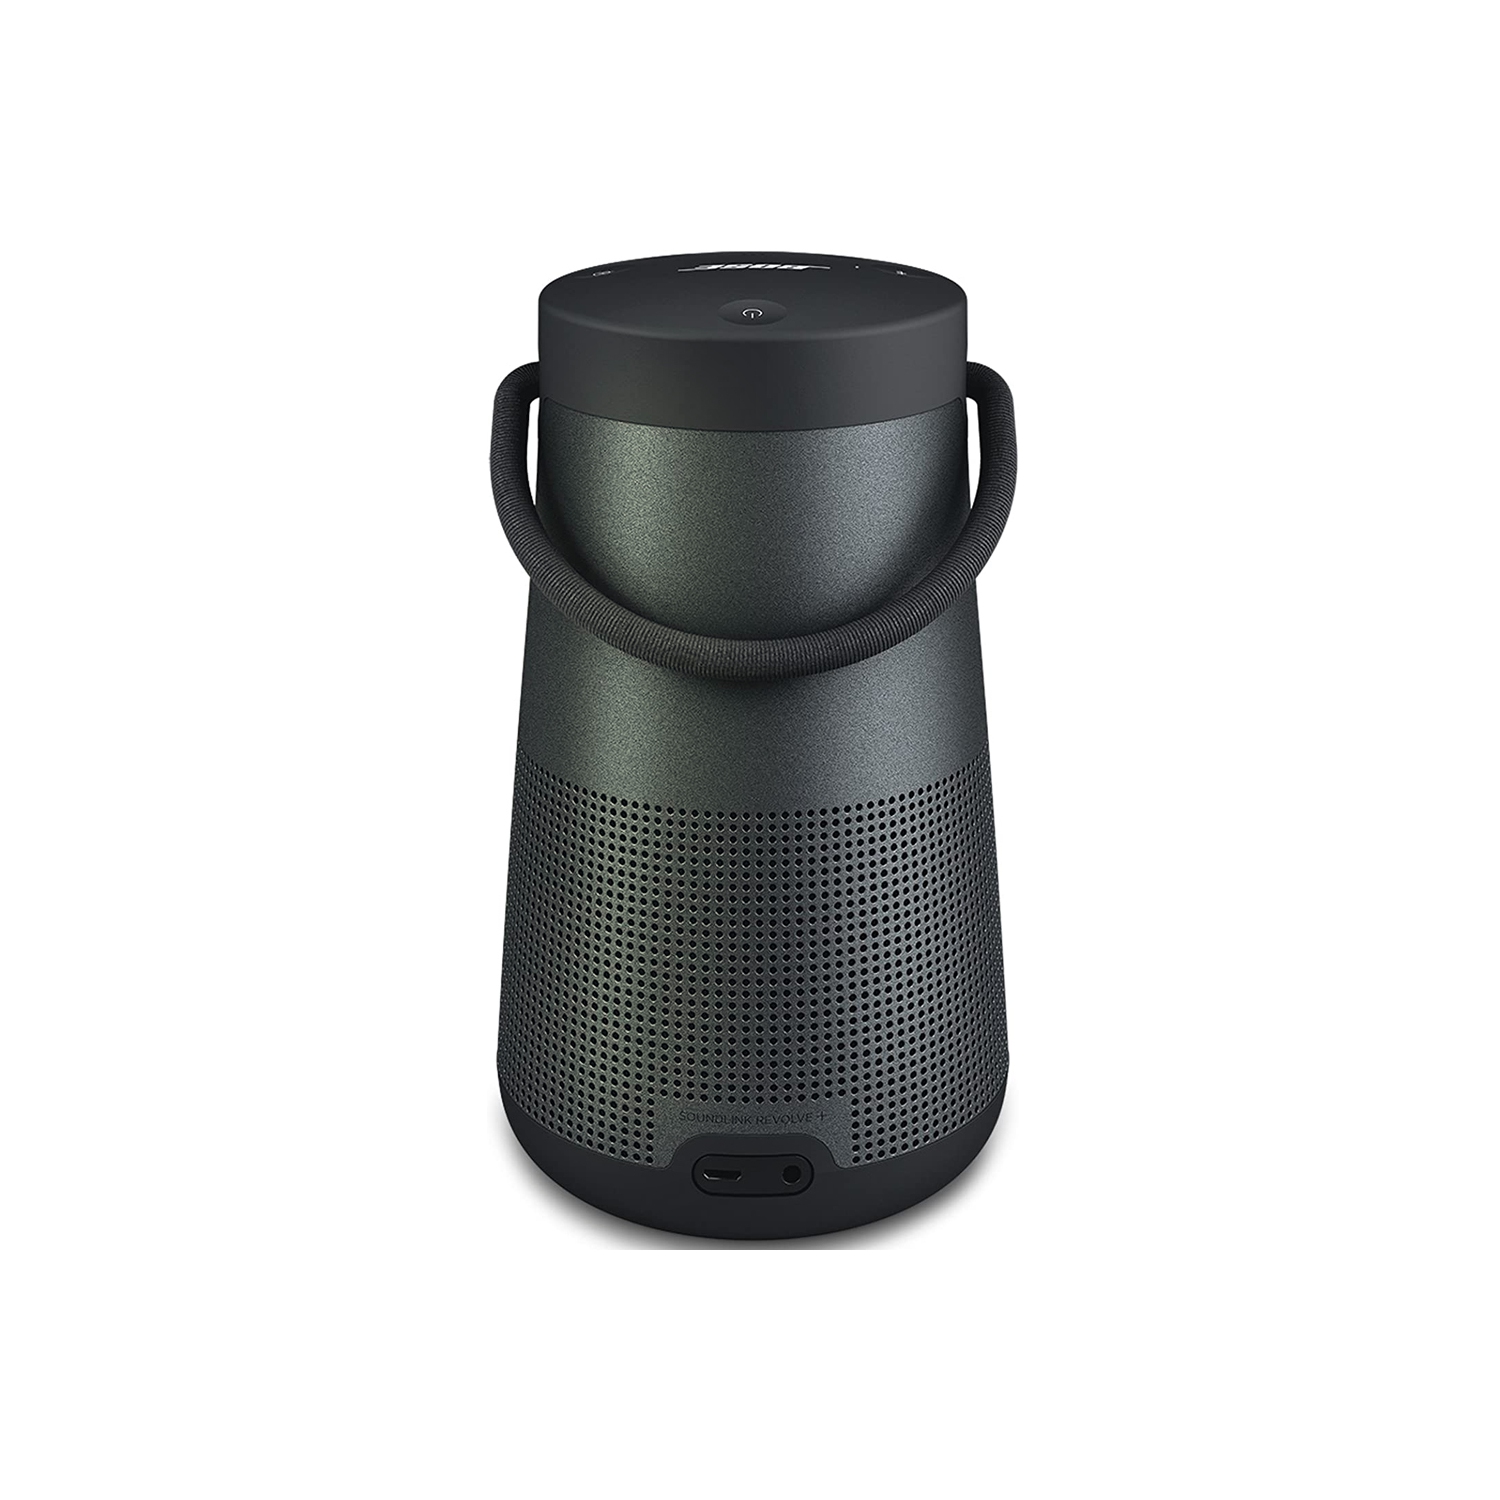 Bose SoundLink Revolve+ Portable Long-Lasting 360 Wireless Water-Resistant Bluetooth Speaker - Open Box International Model with Seller Warranty